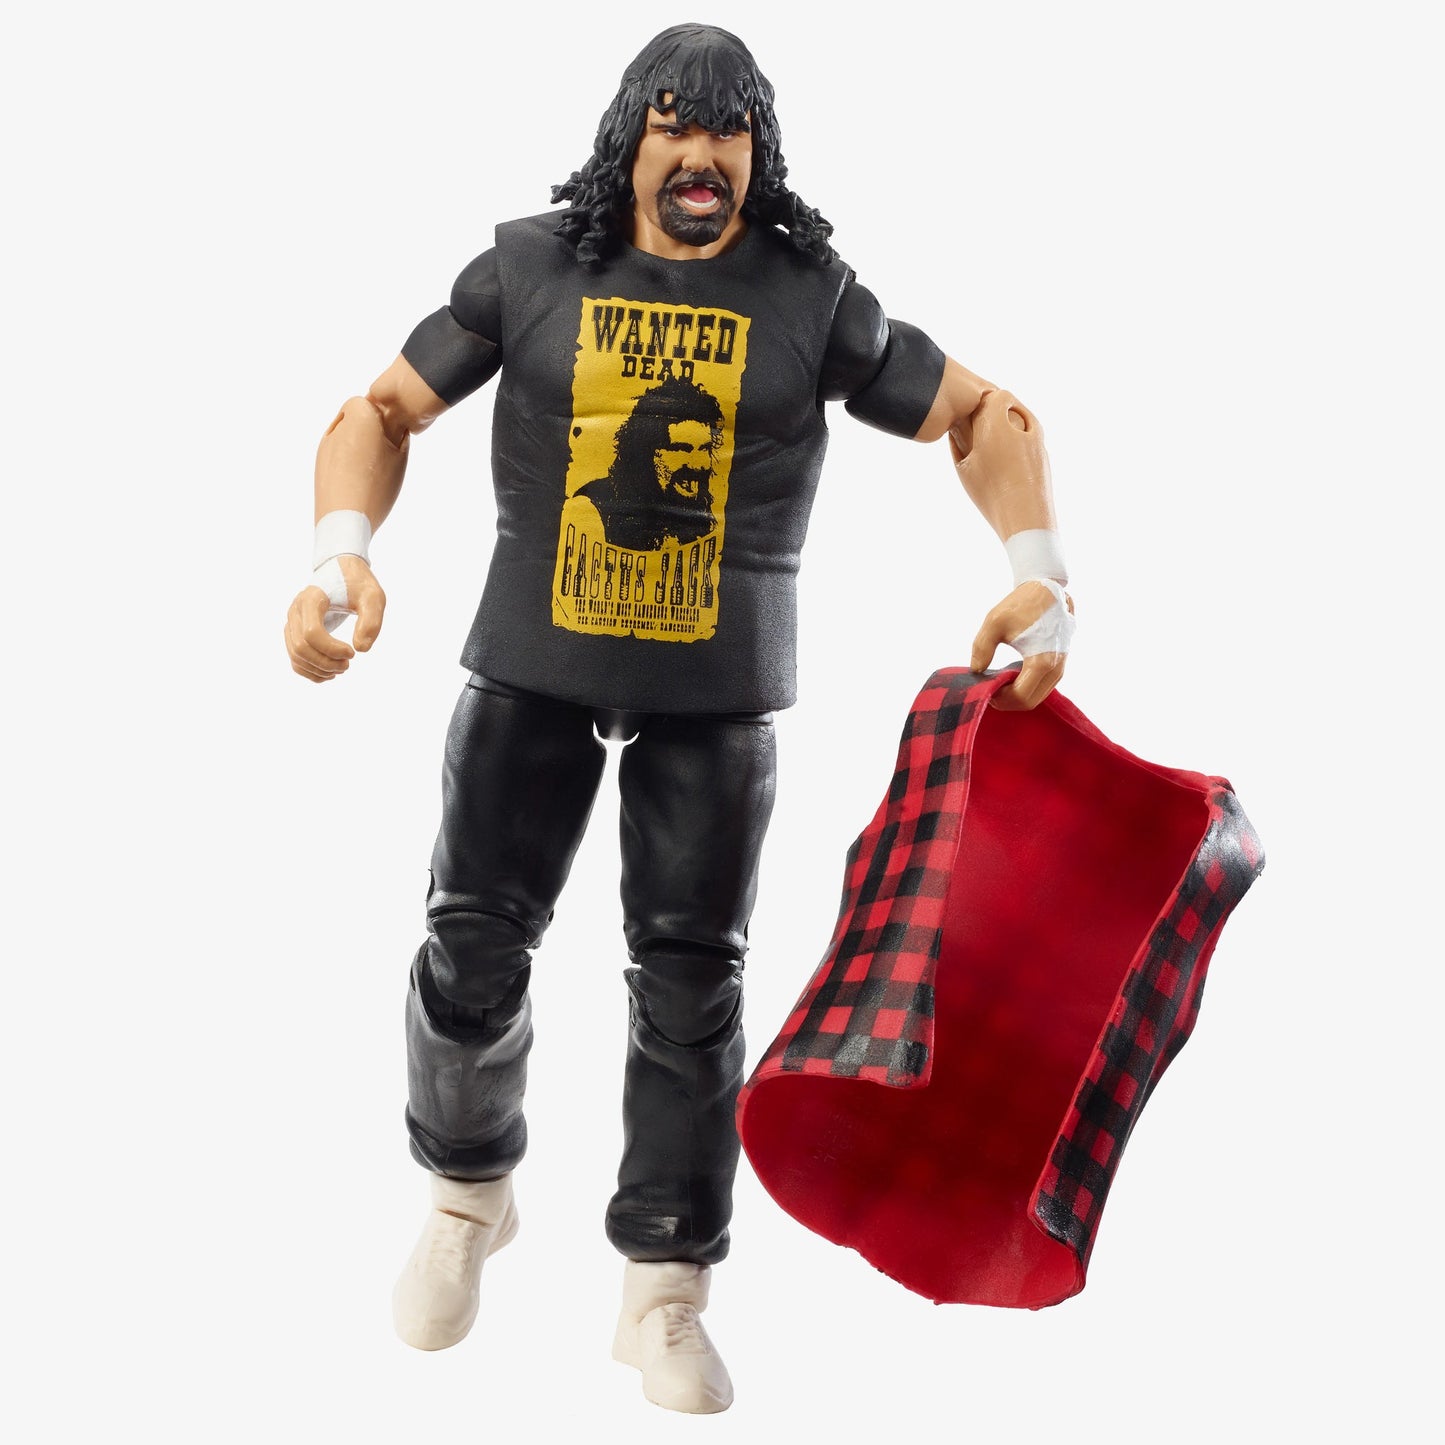 Mick Foley WWE WrestleMania 36 Elite Collection